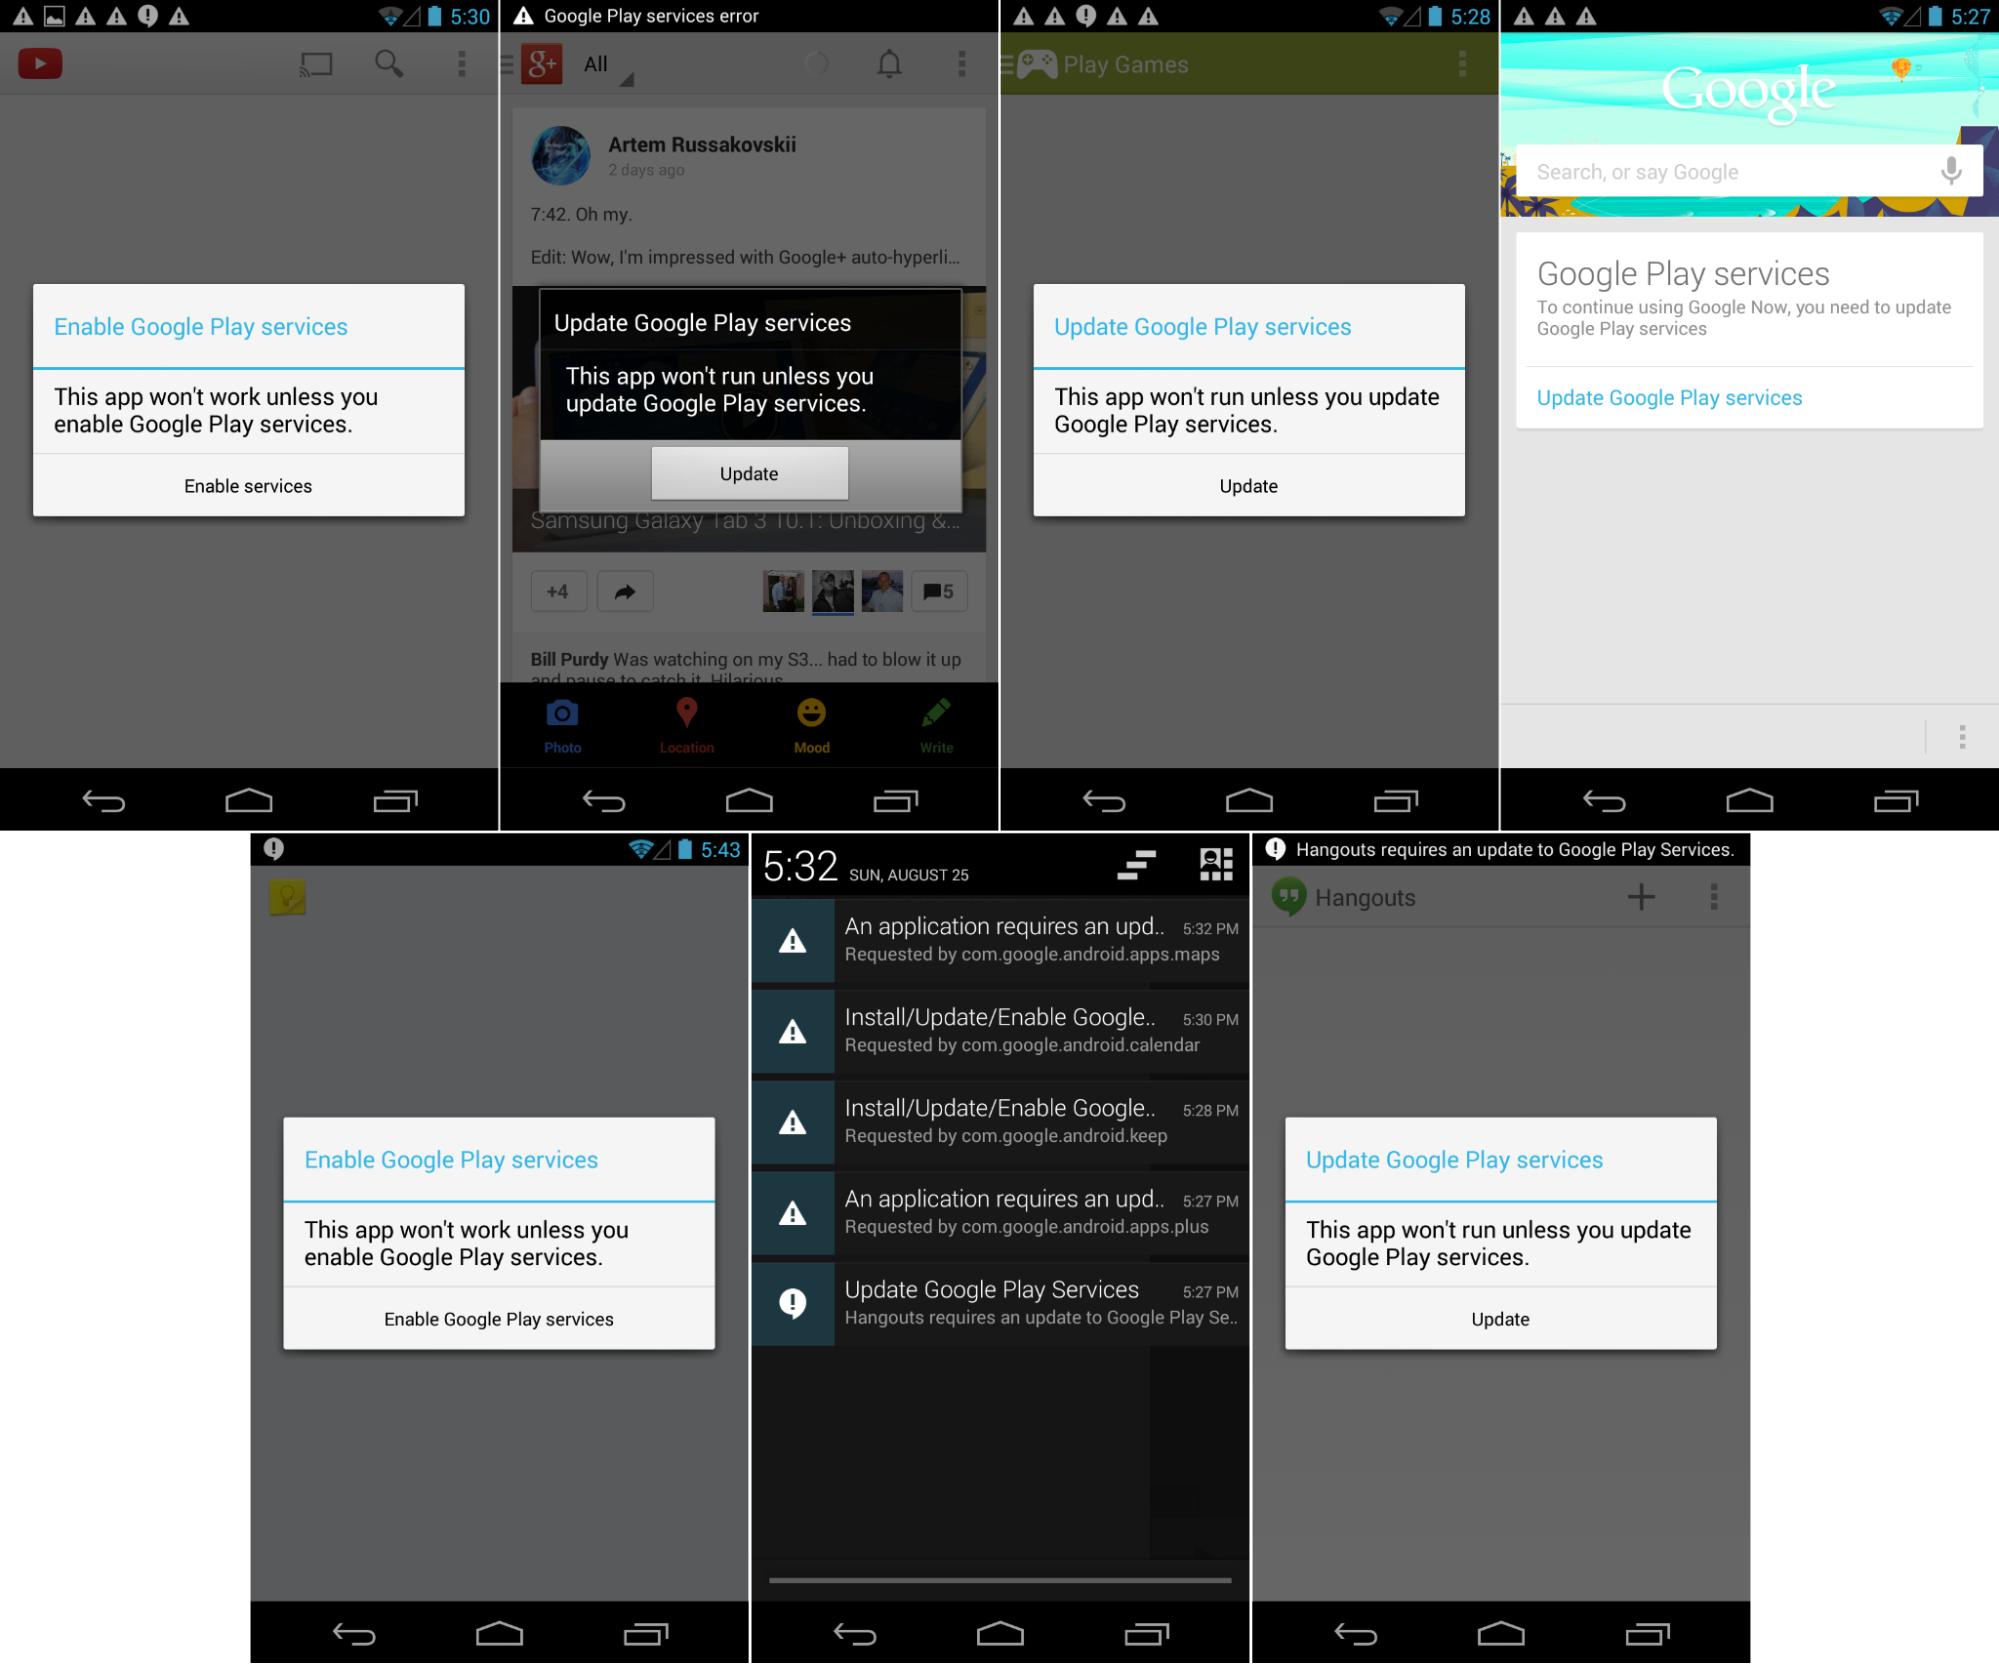 Google Play Services screenshots